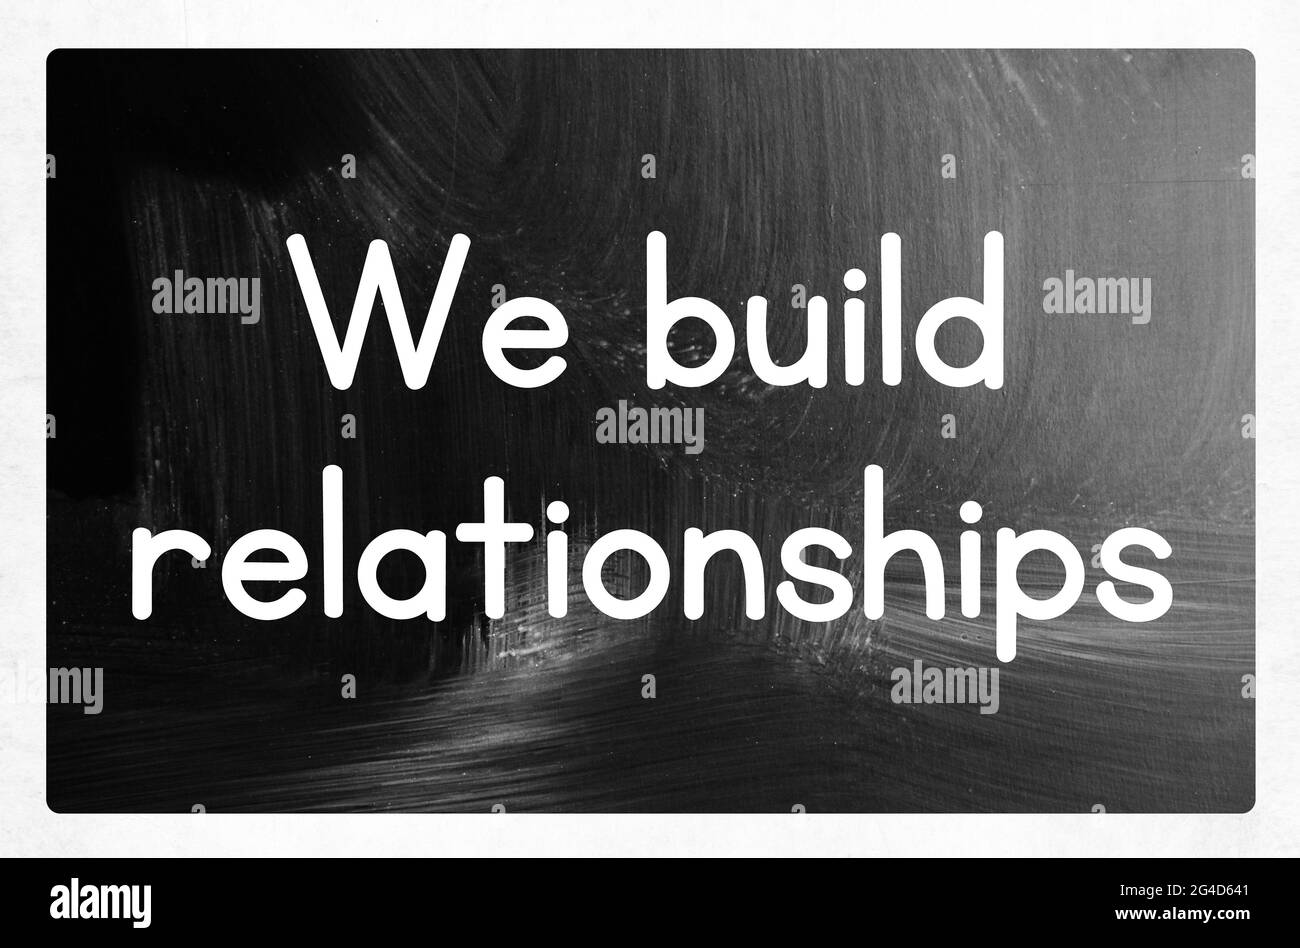 we build relationships Stock Photo